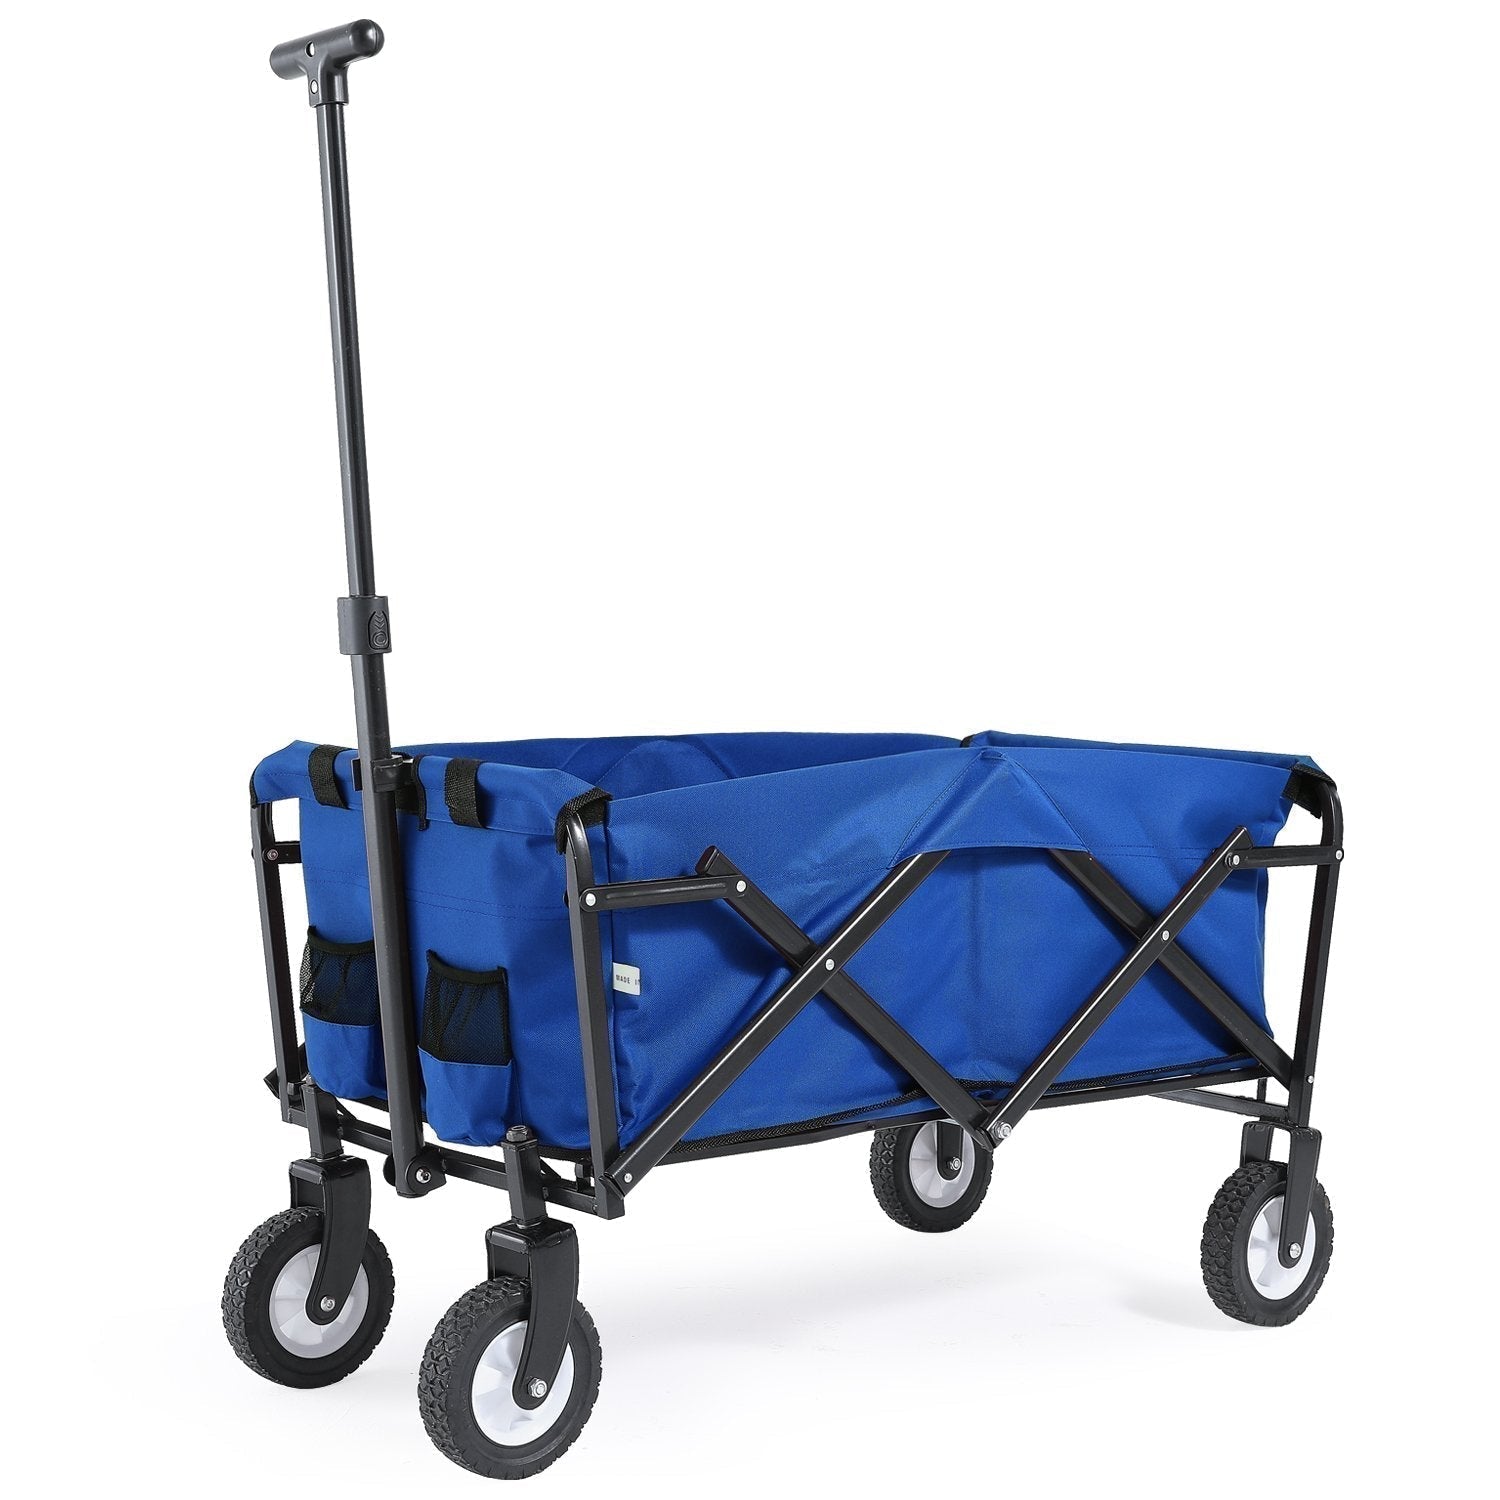 Folding Collapsible Utility Wagon Cart Outdoor Garden Shopping Camping Cart - ABC-CANOPY